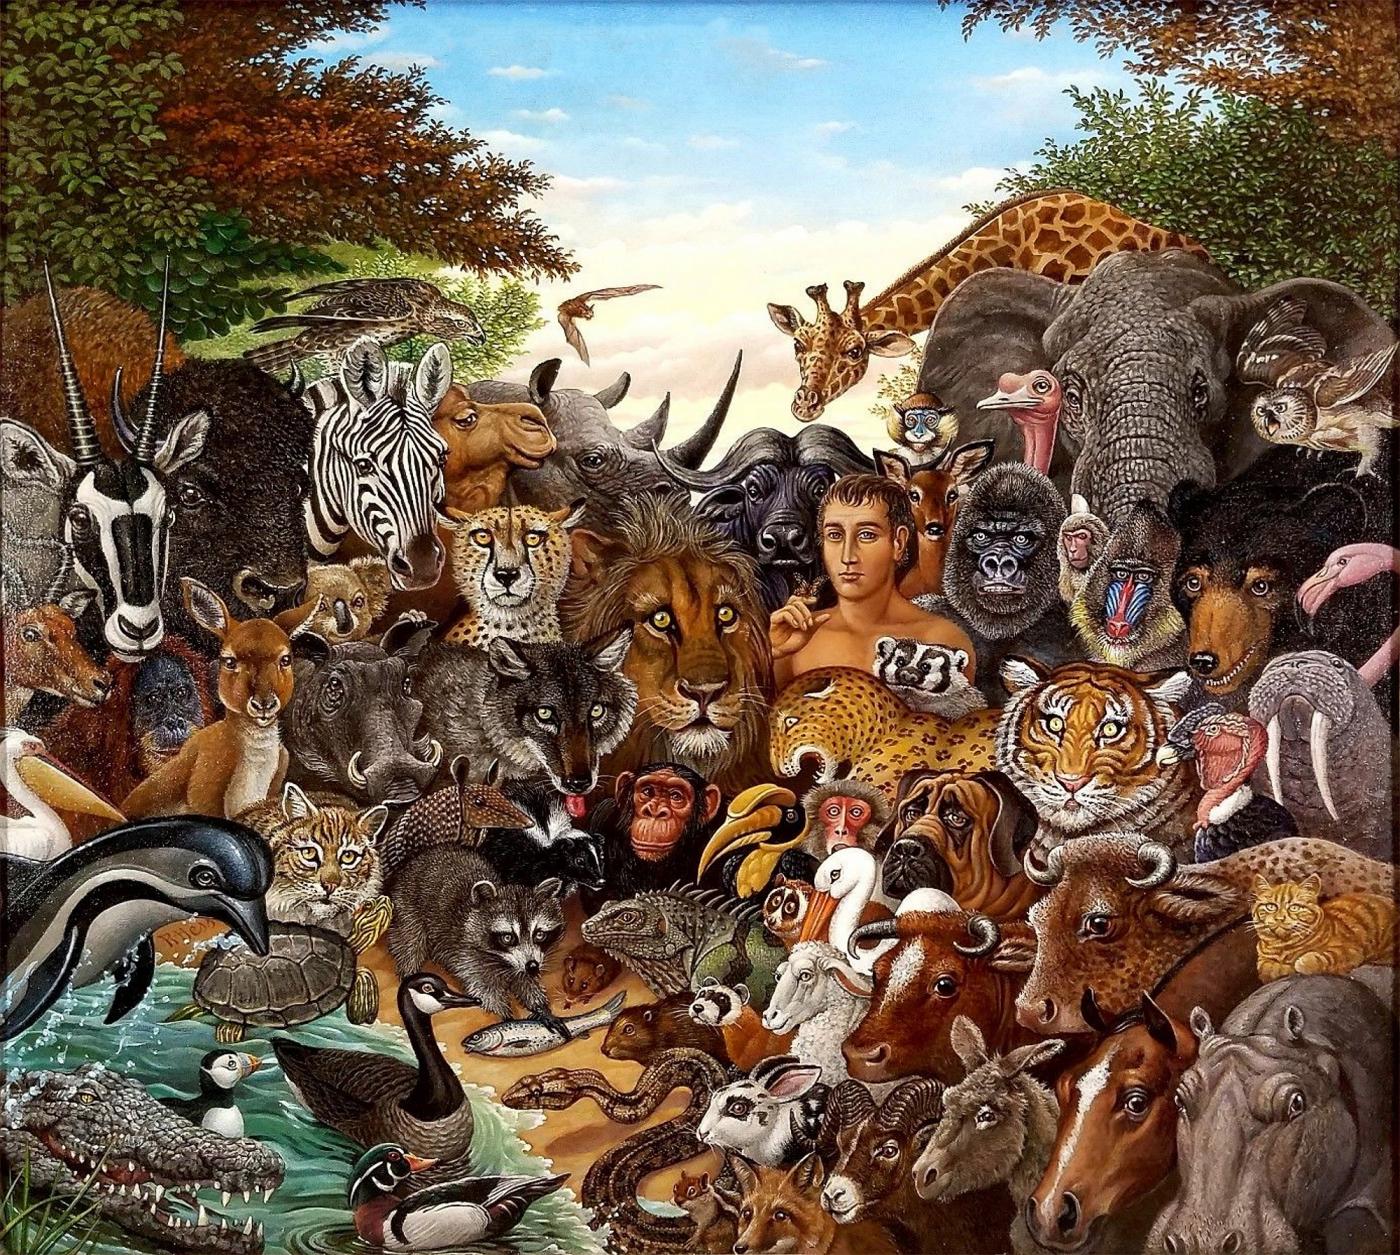 Richard Hess - Animal Kingdom, Zebra, Buffalo, Lion, Giraffe, Elephant,  Monkey, Tiger, Gorilla